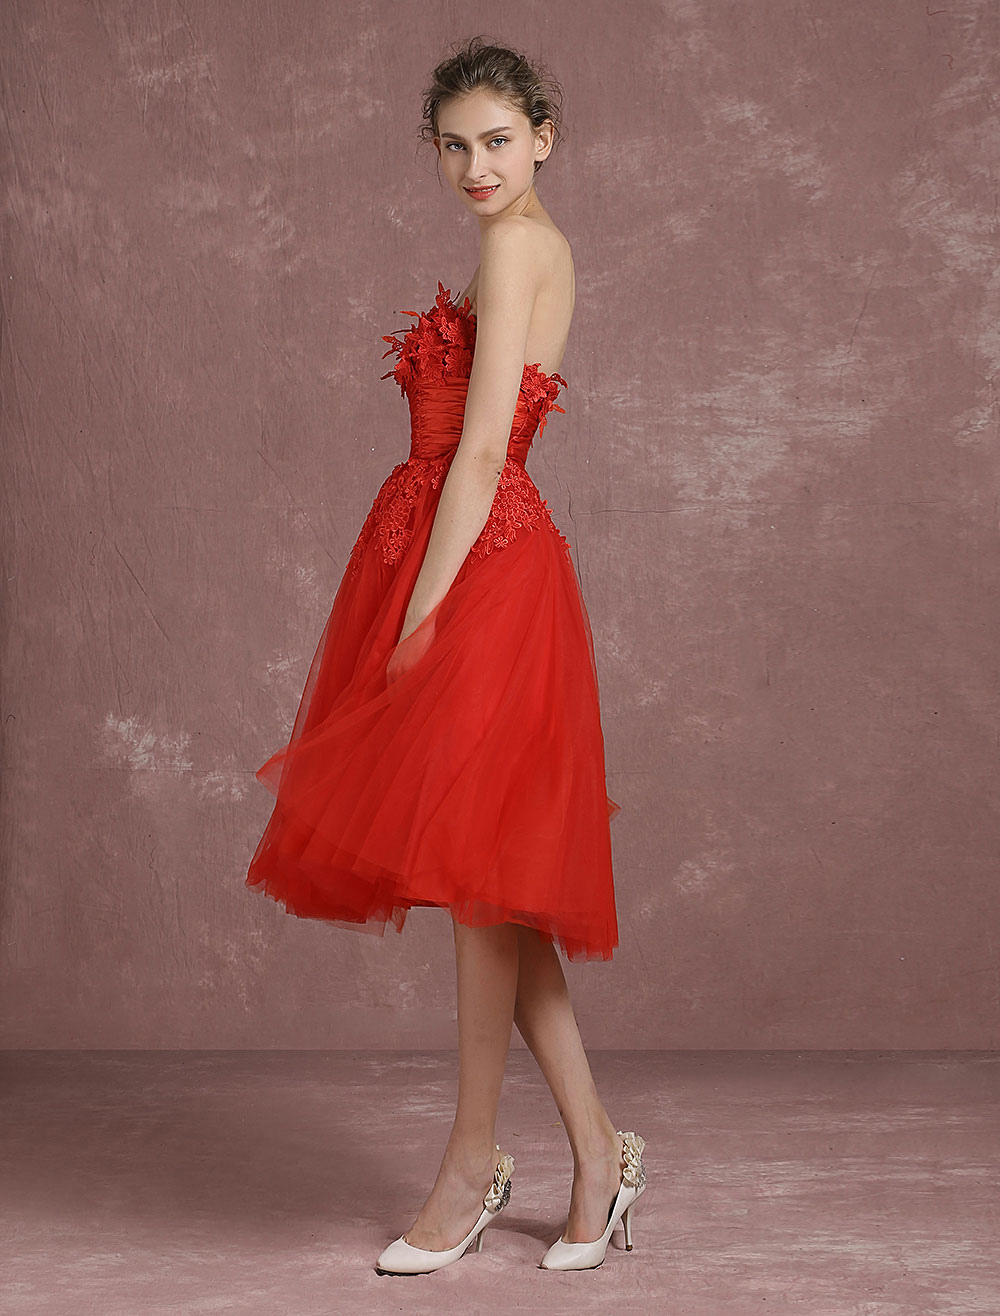 Vestido moderno de cóctel rojo con escote palabra de de encaje - Milanoo.com